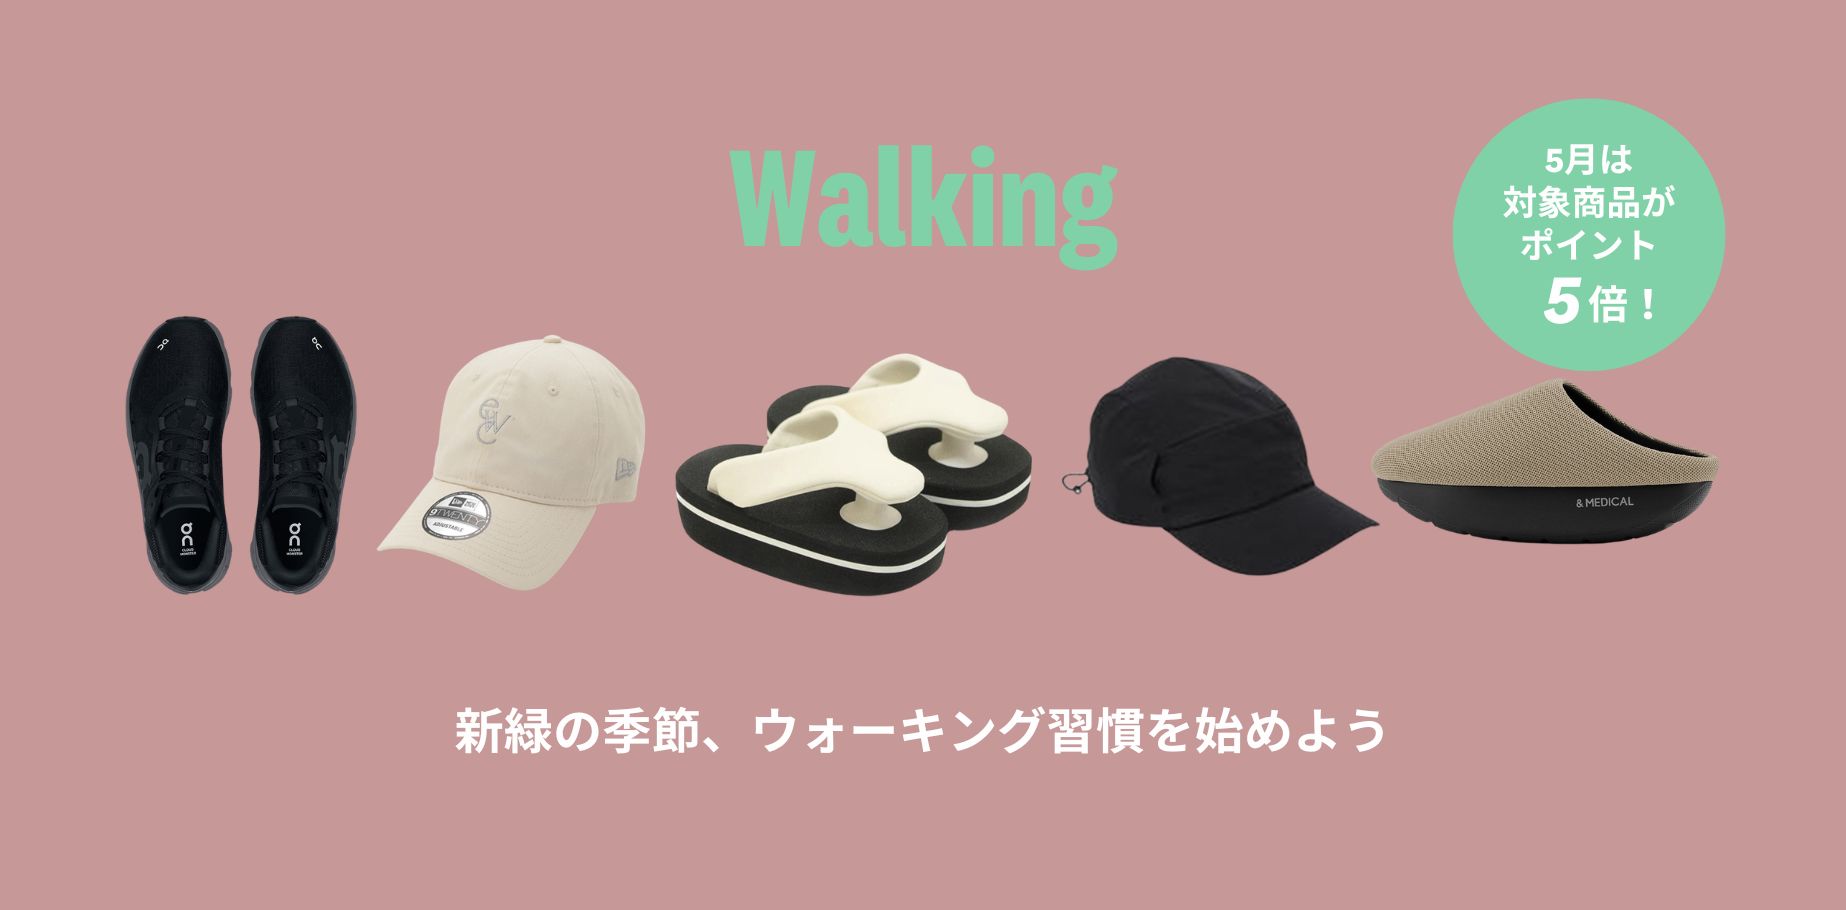 【Walking】新緑の季節、ウォーキング習慣を始めよう